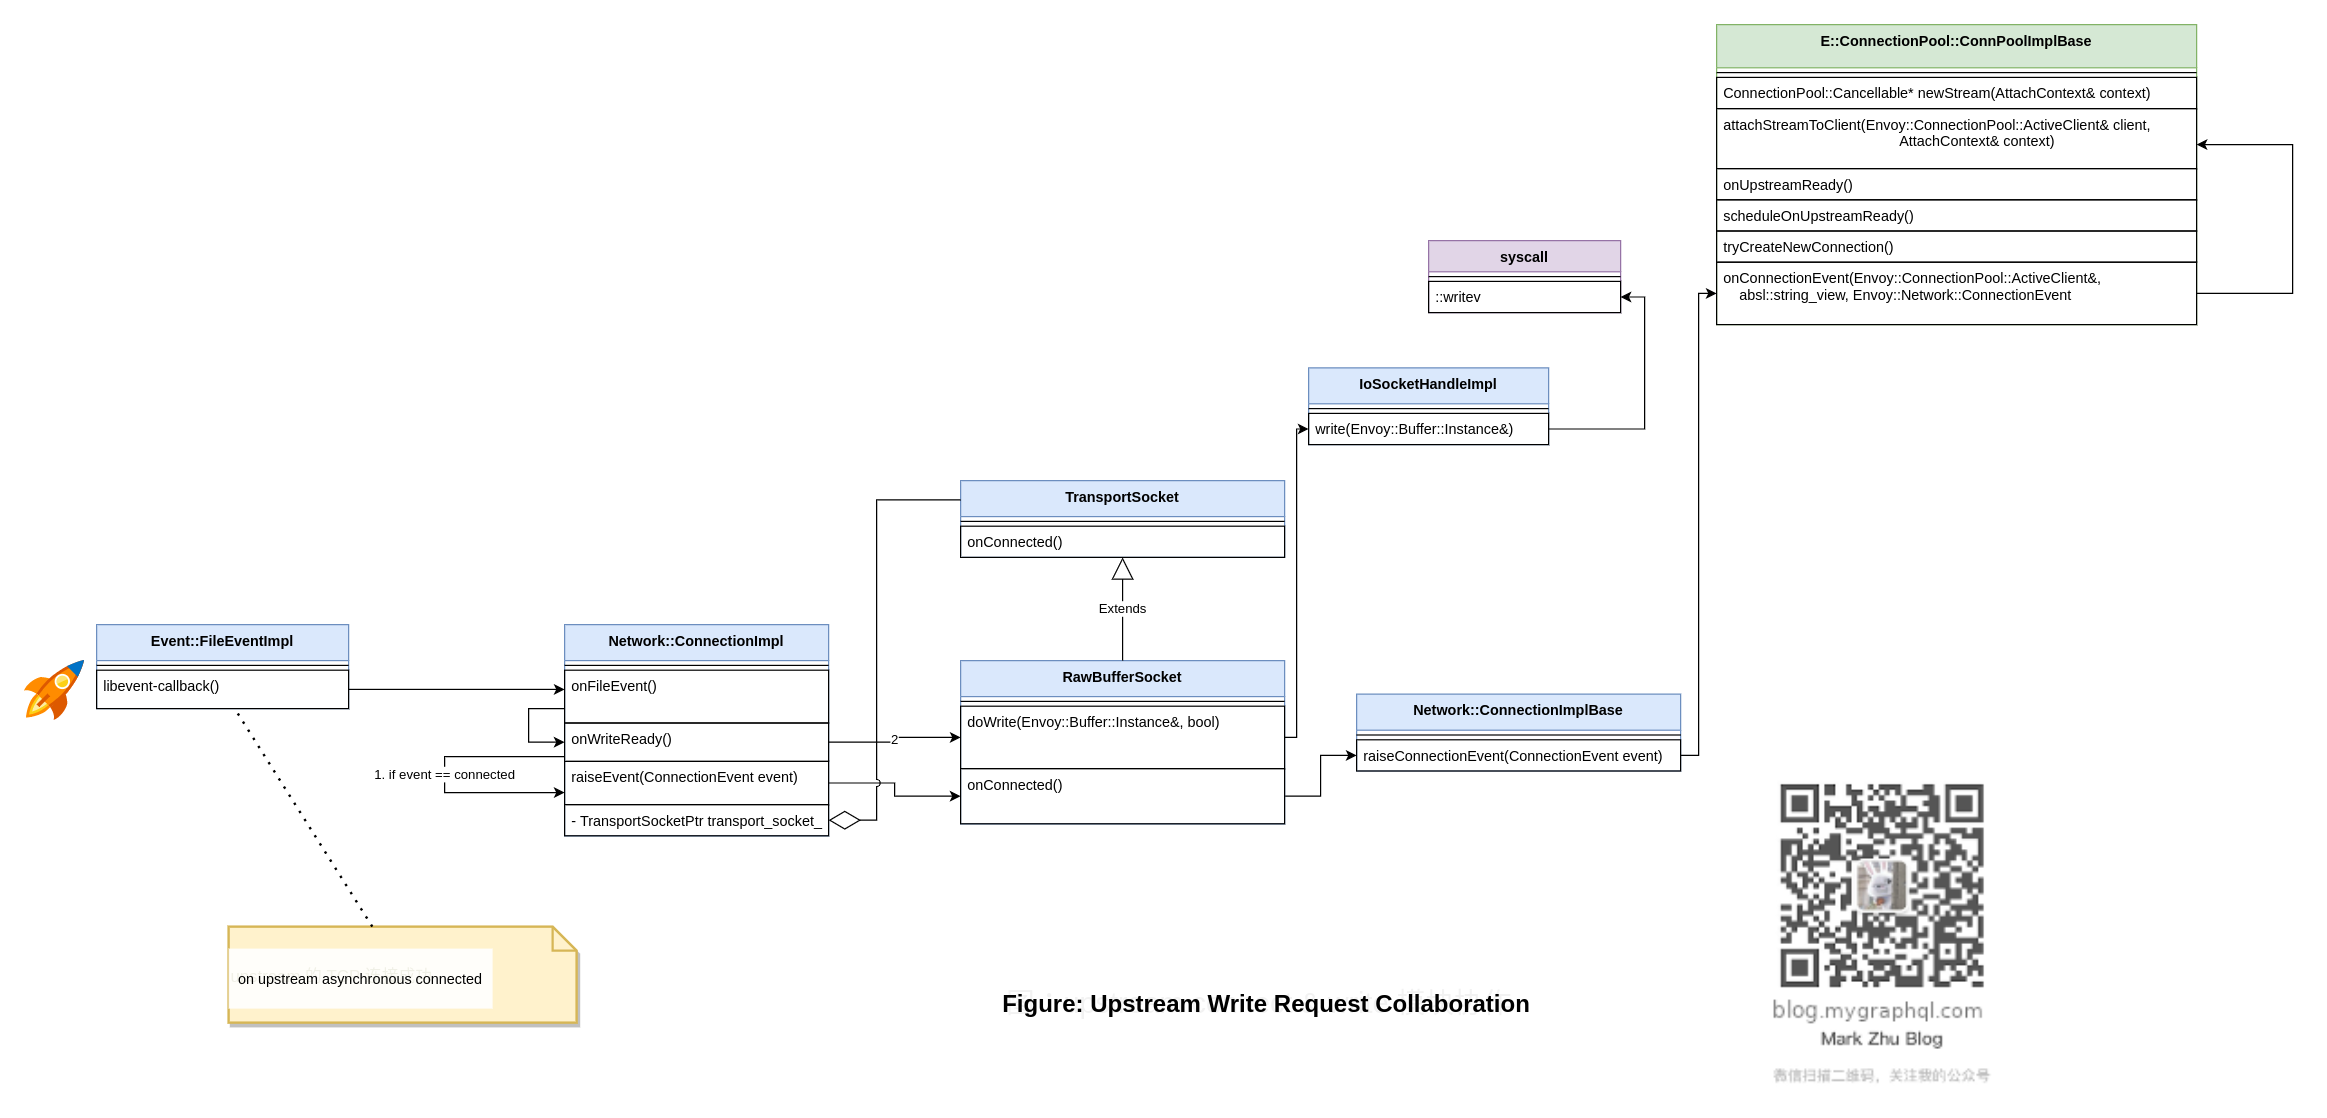 Figure: Upstream Write Request Collaboration